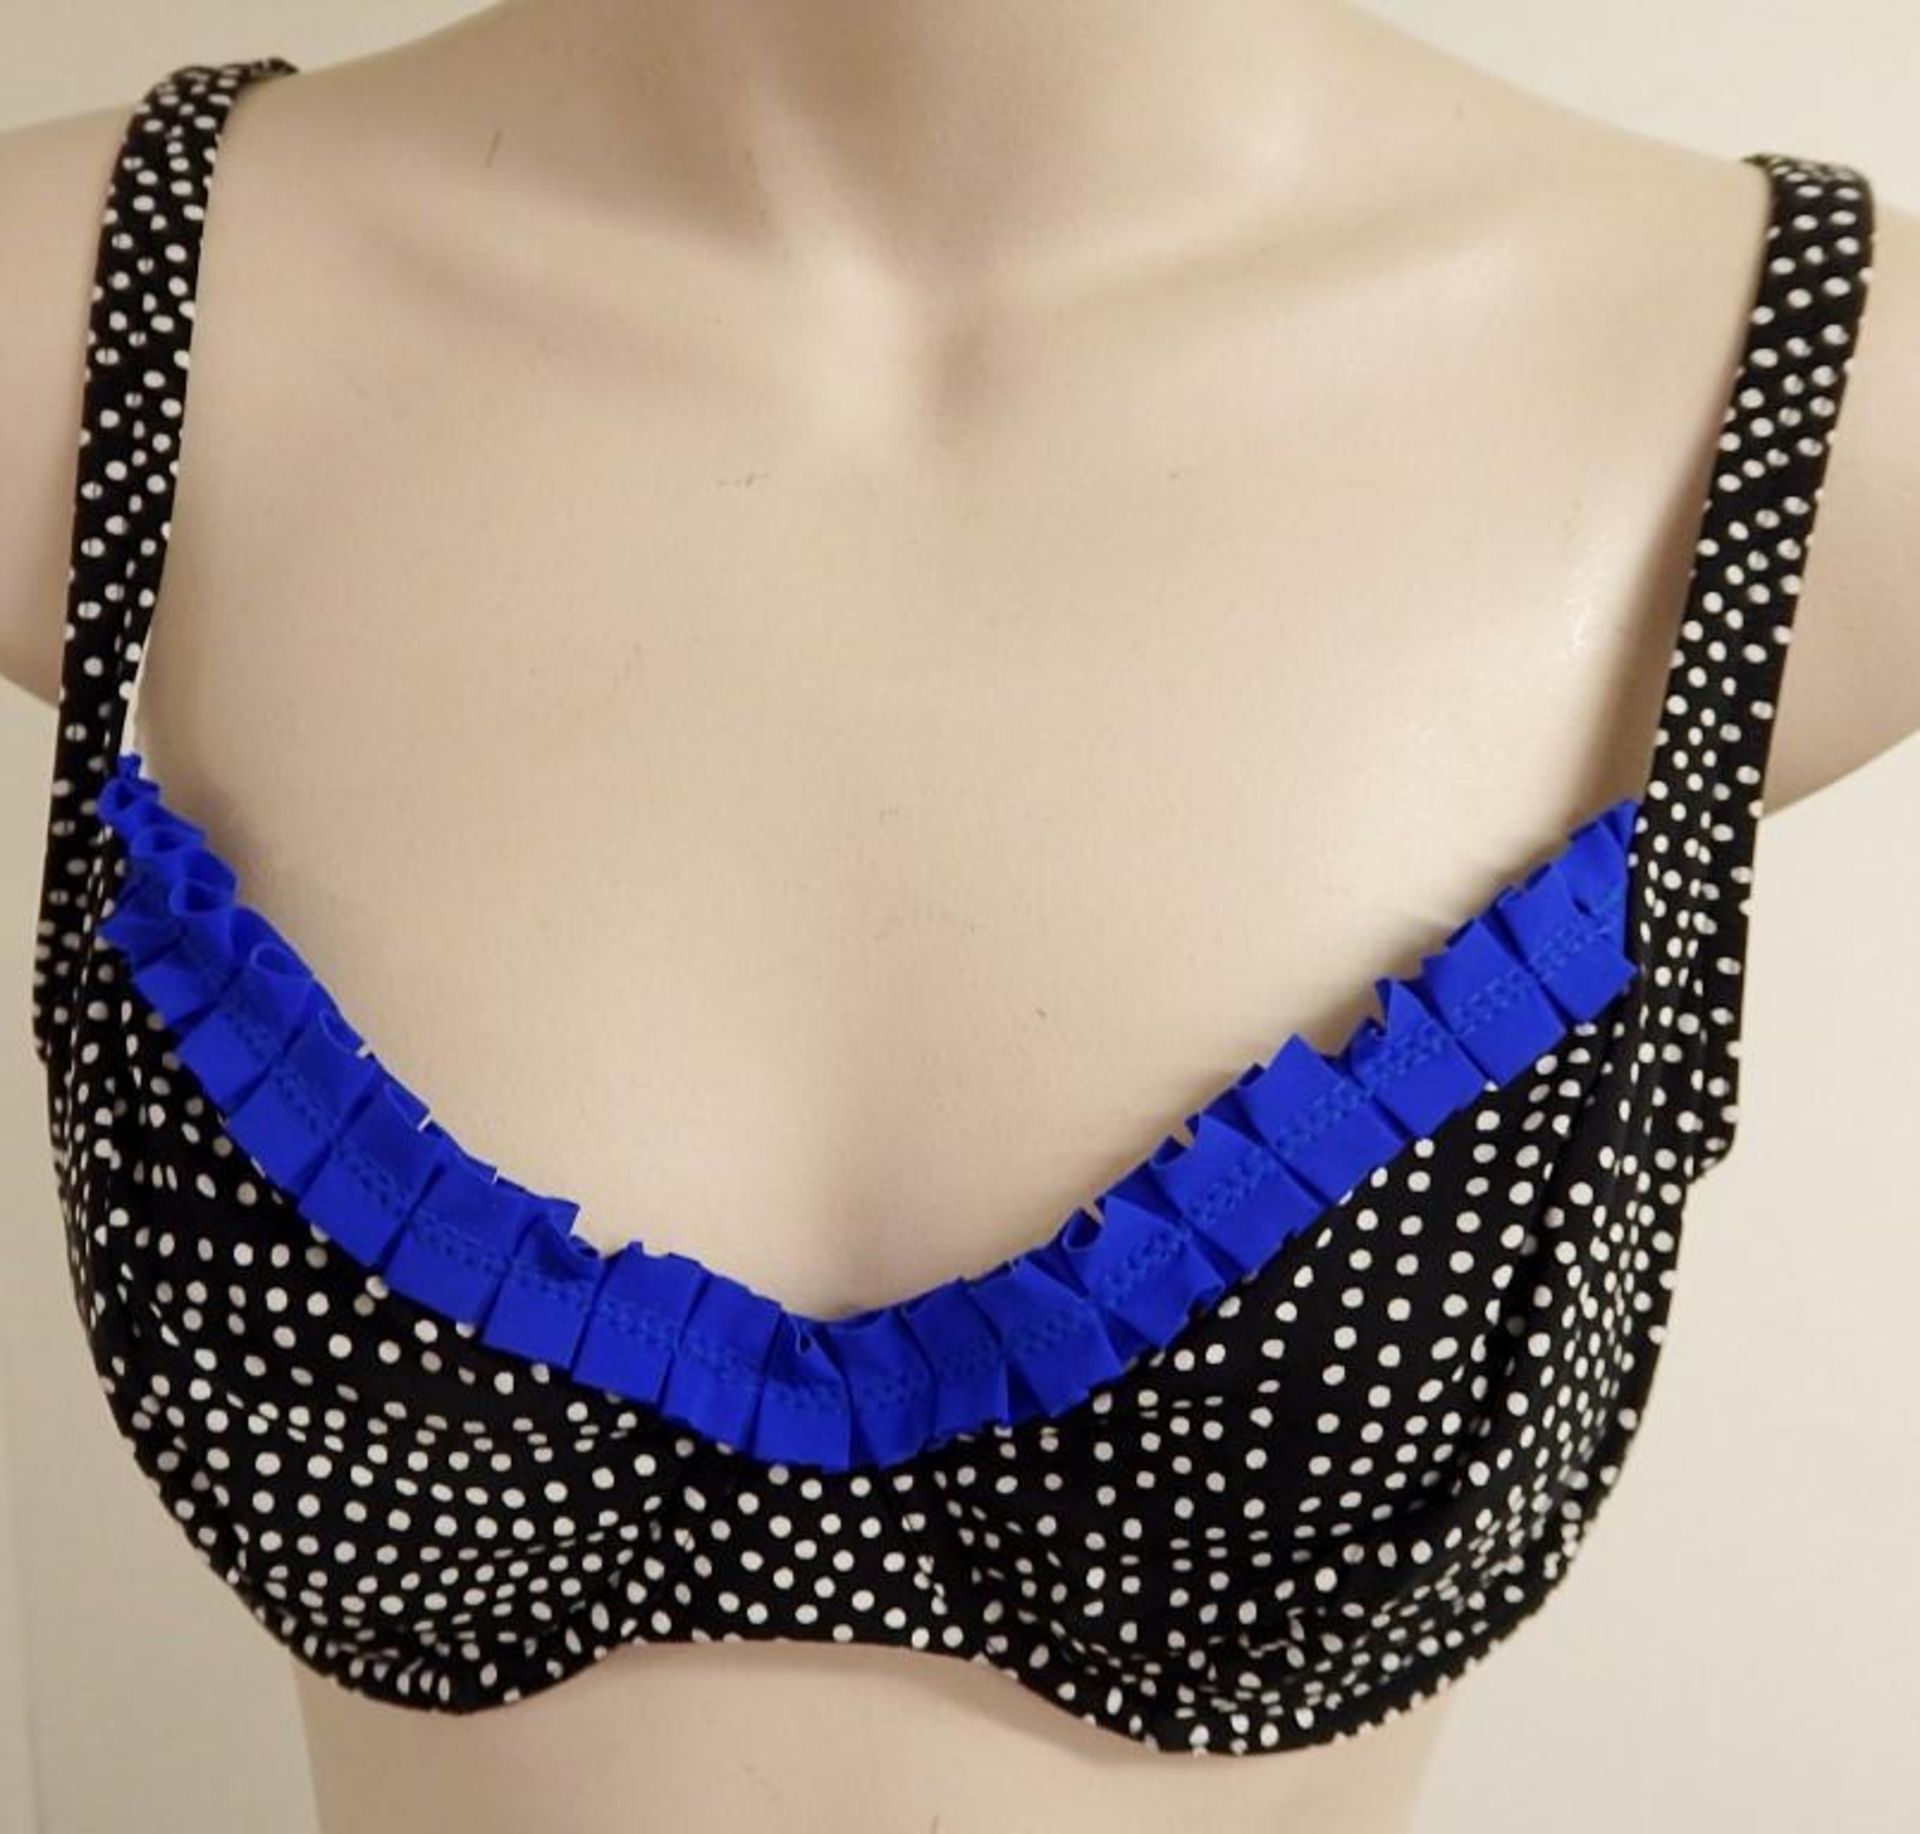 1 x Rasurel - Black Polka dot with royal blue trim &frill Tobago Bikini - B21068 - Size 2C - UK 32 - - Image 7 of 10